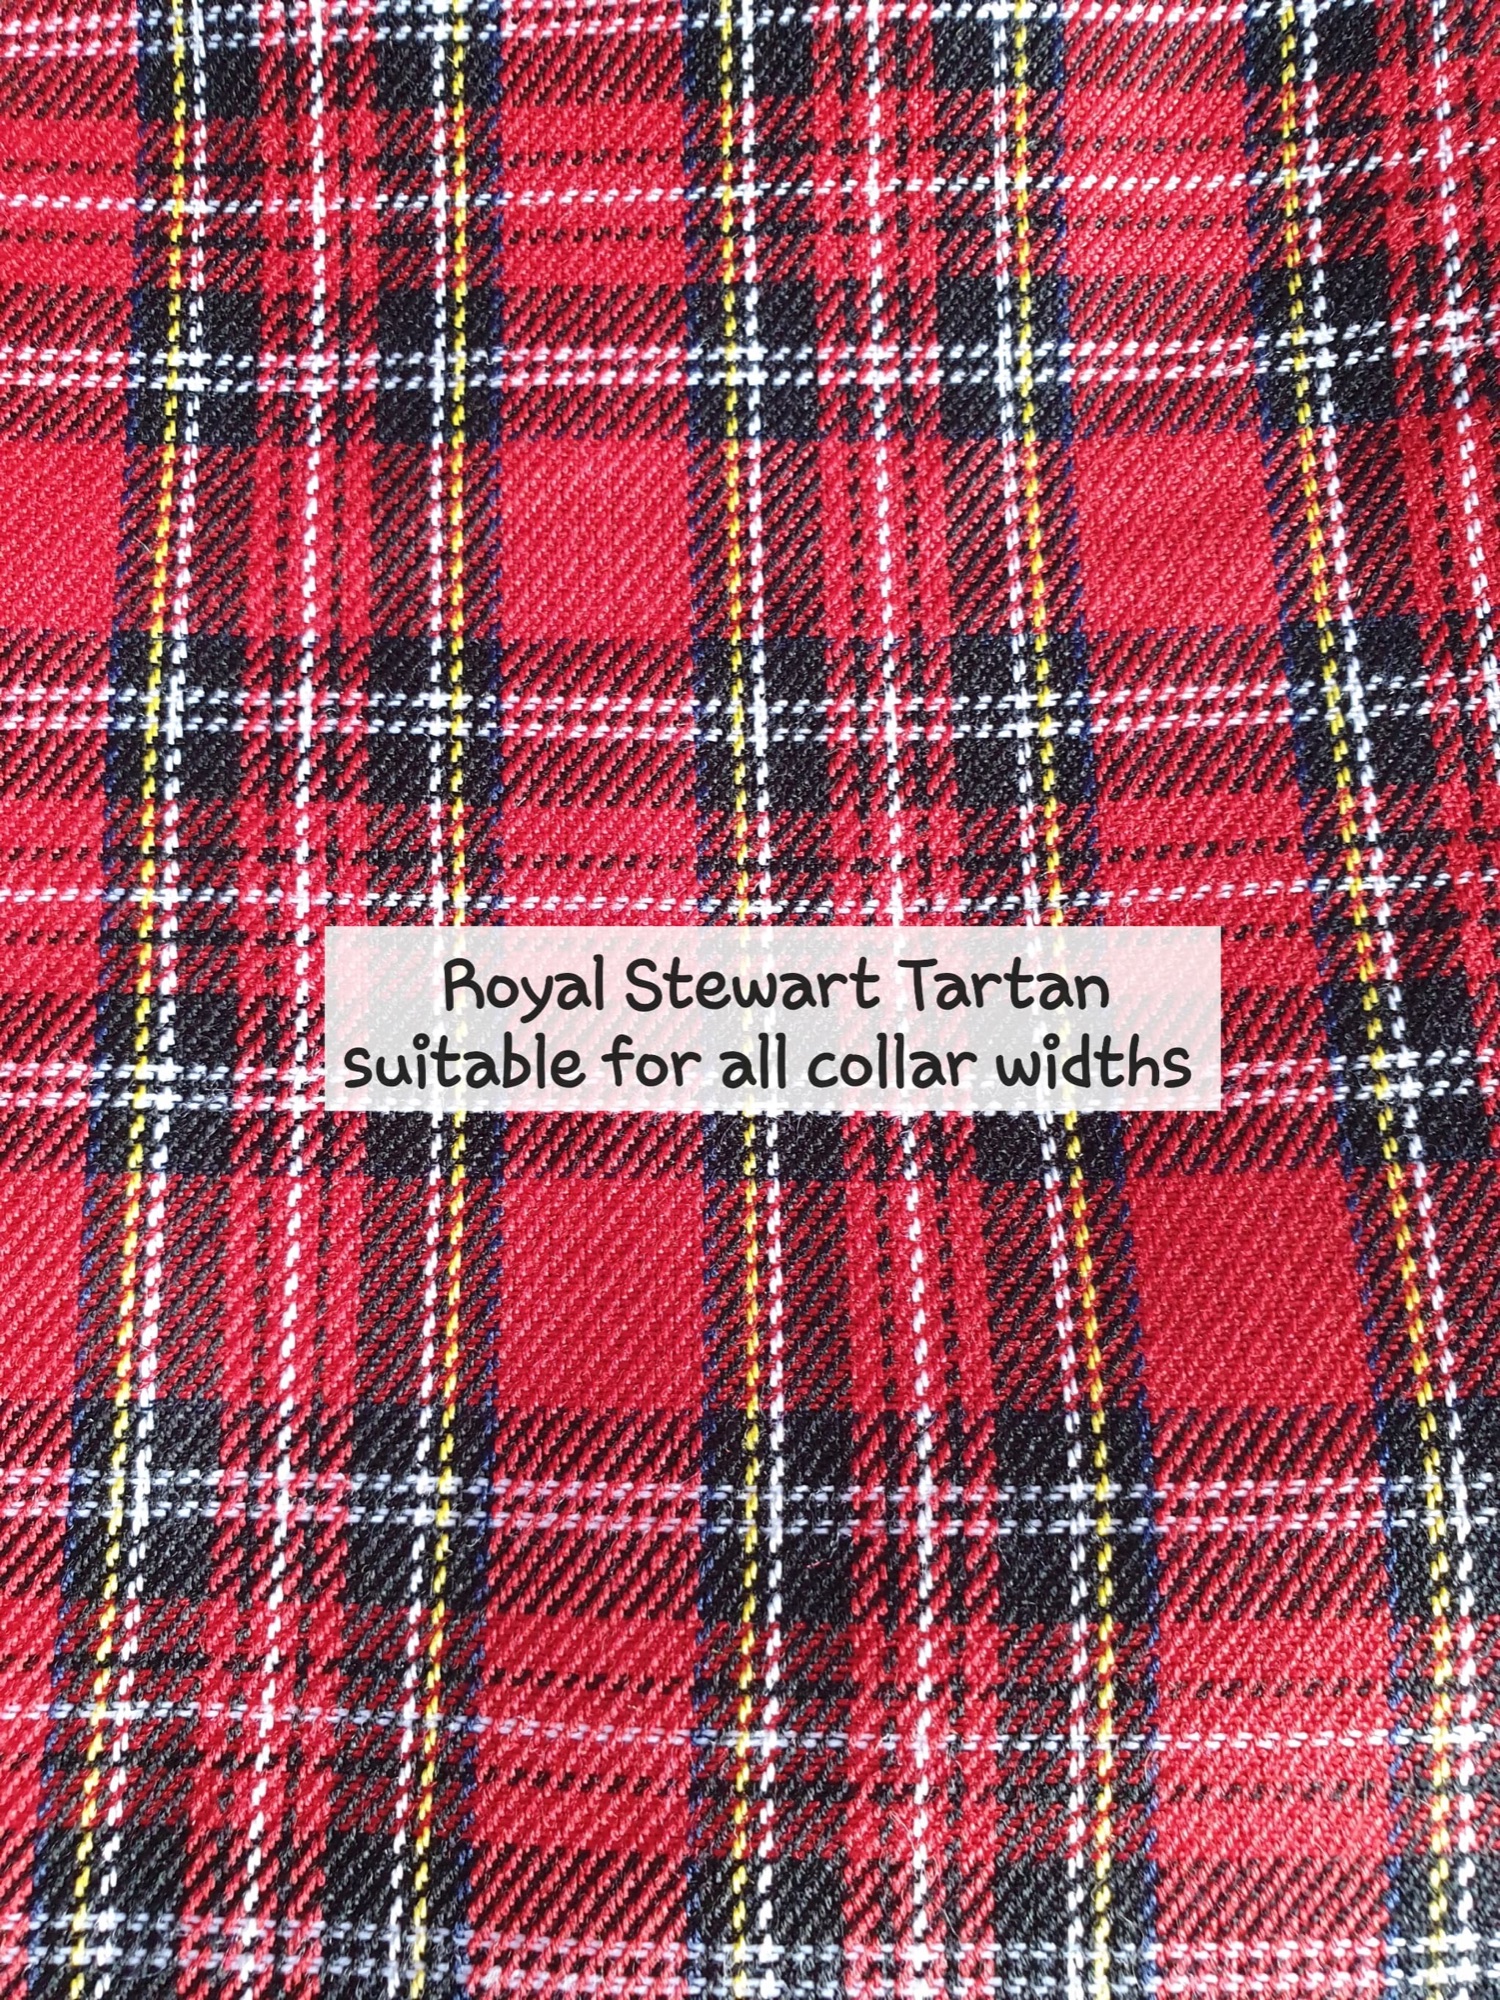 royal stewart tartan